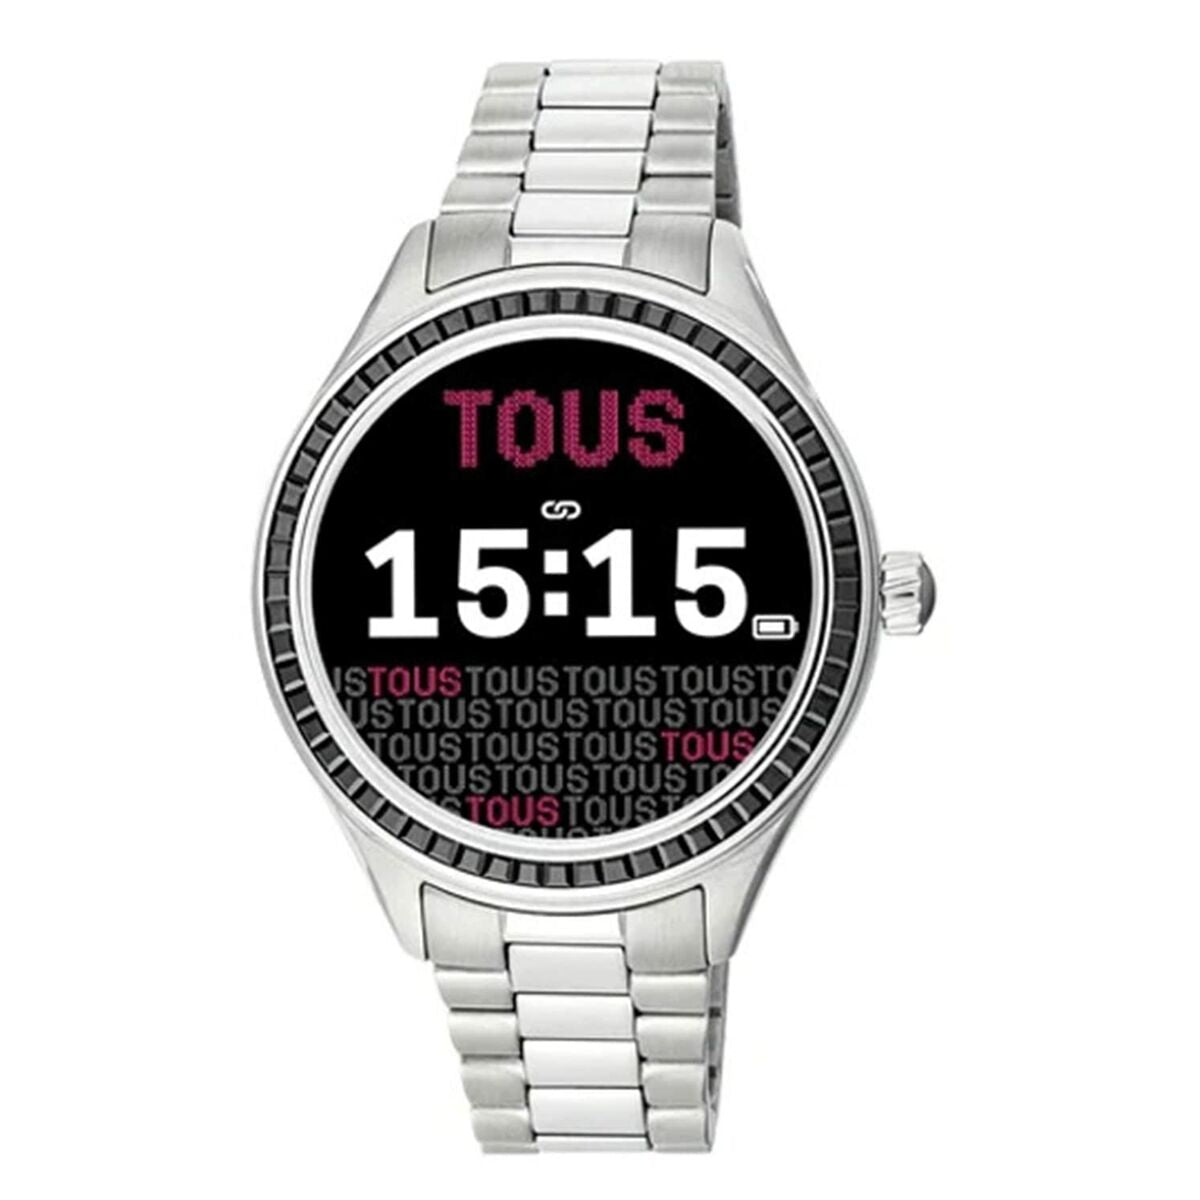 Kaufe Smartwatch Tous 200351043 bei AWK Flagship um € 331.00